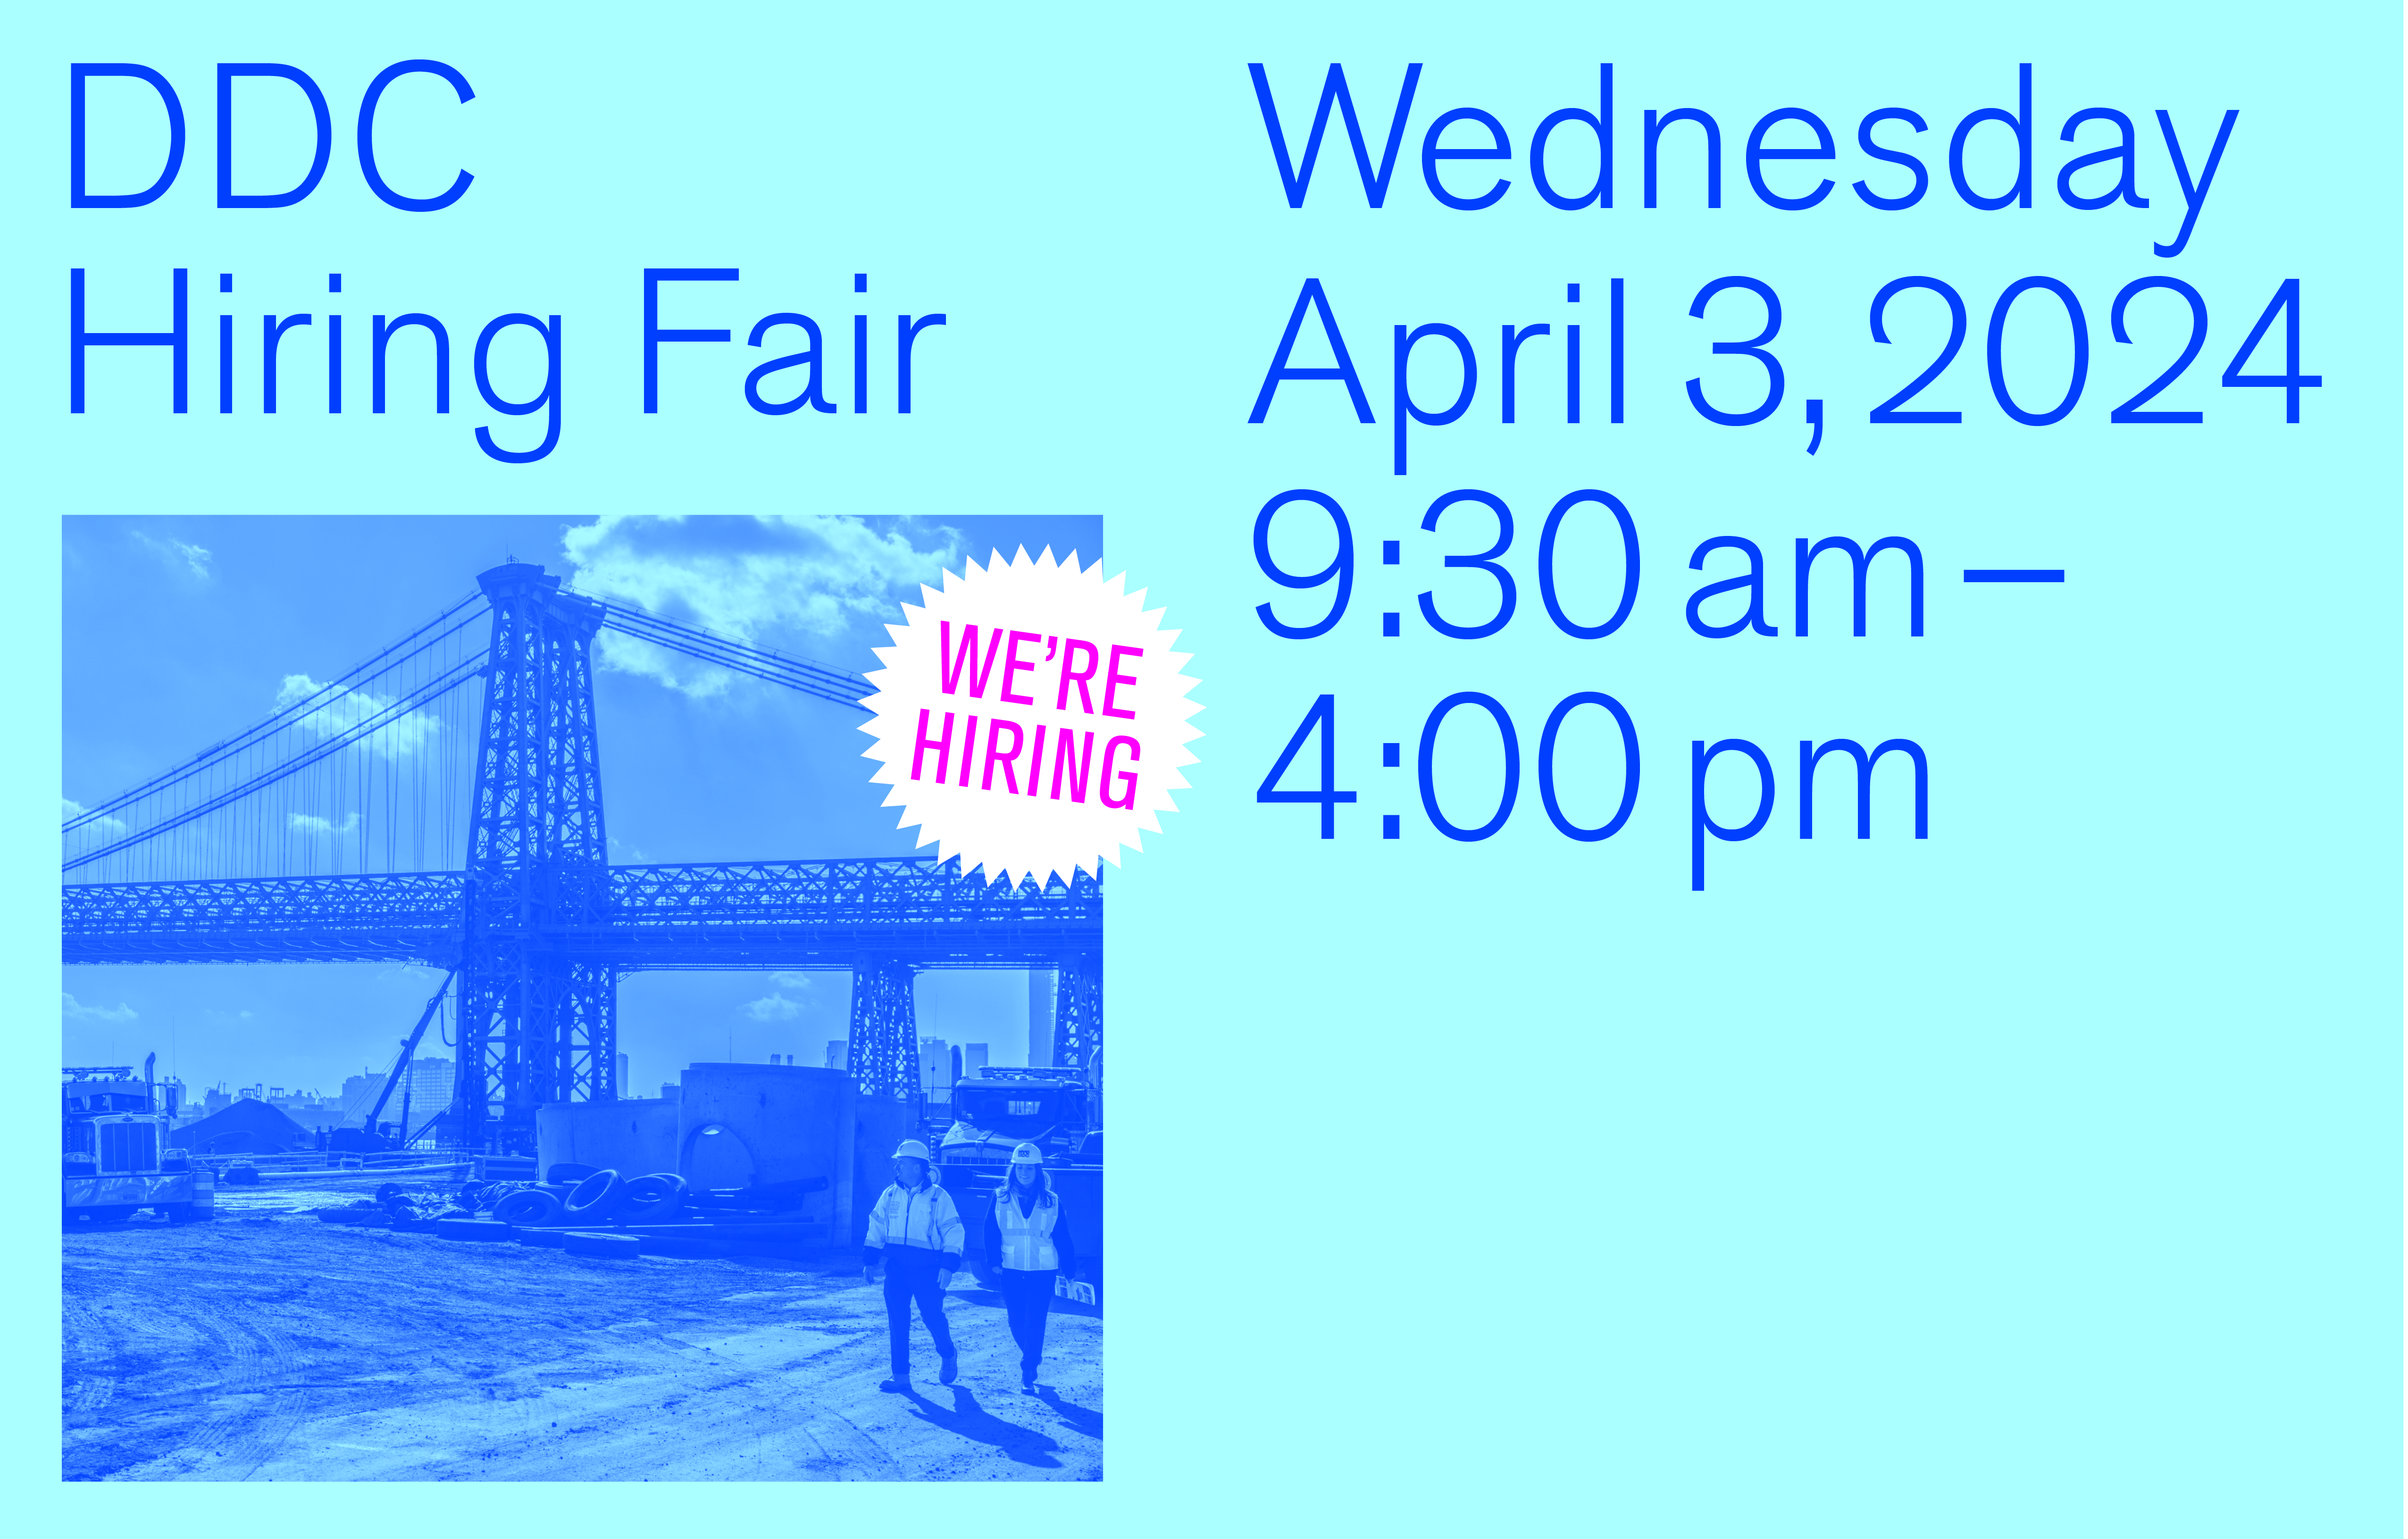 Banner announcing the DDC Hiring Fair on April 3rd
                                           